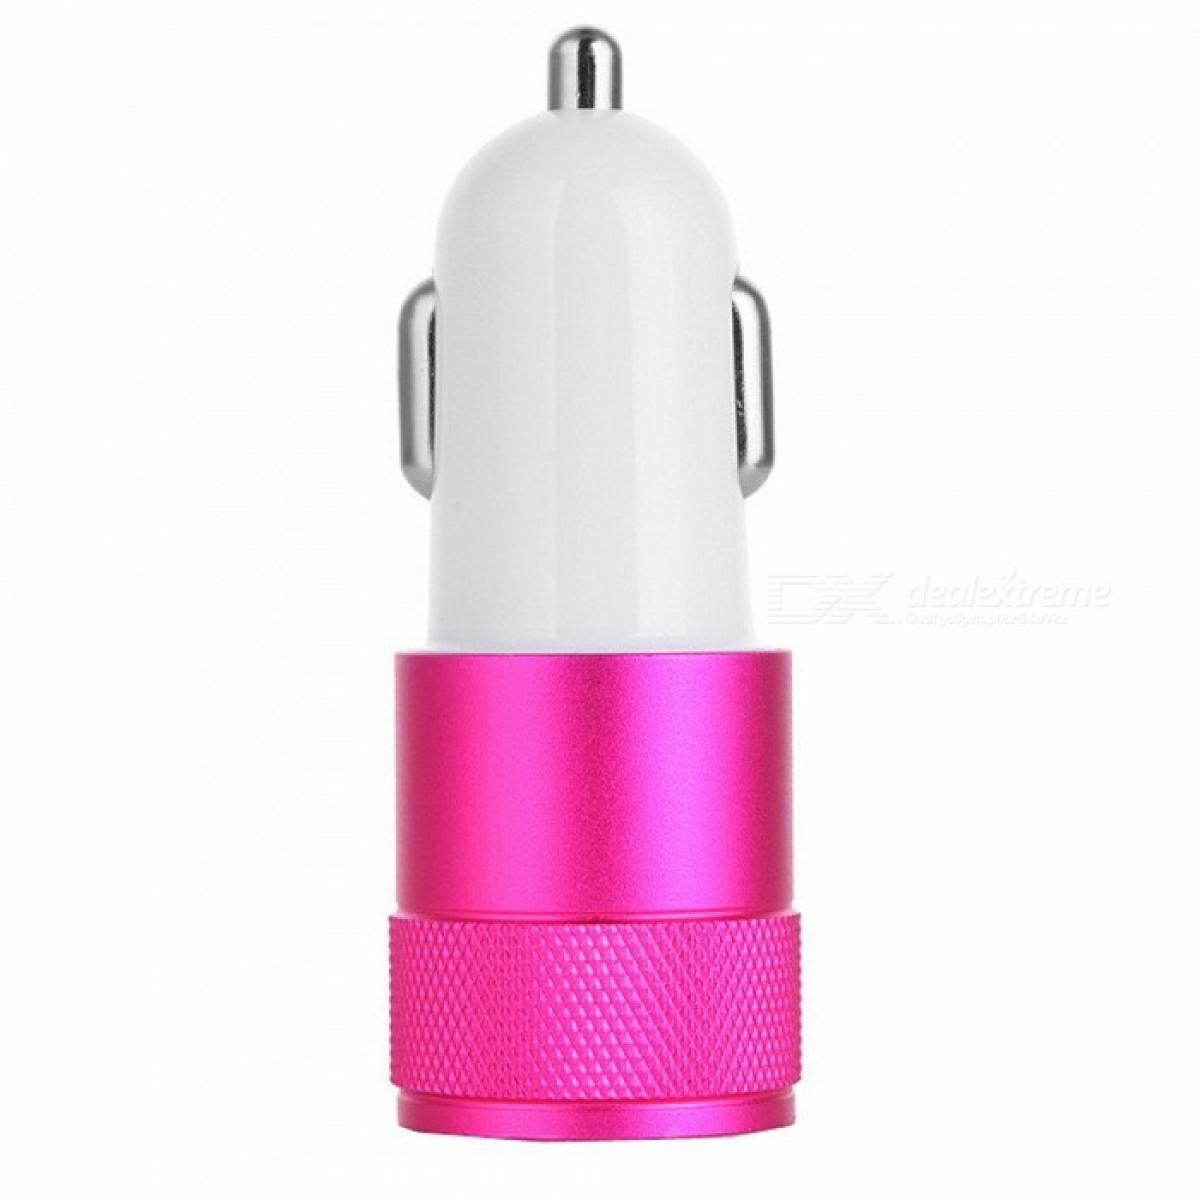 Shot - Double Adaptateur Prise Allume Cigare USB pour "IPHONE 12"2 Ports Voiture Chargeur Couleurs (ROSE) - Chargeur Voiture 12V